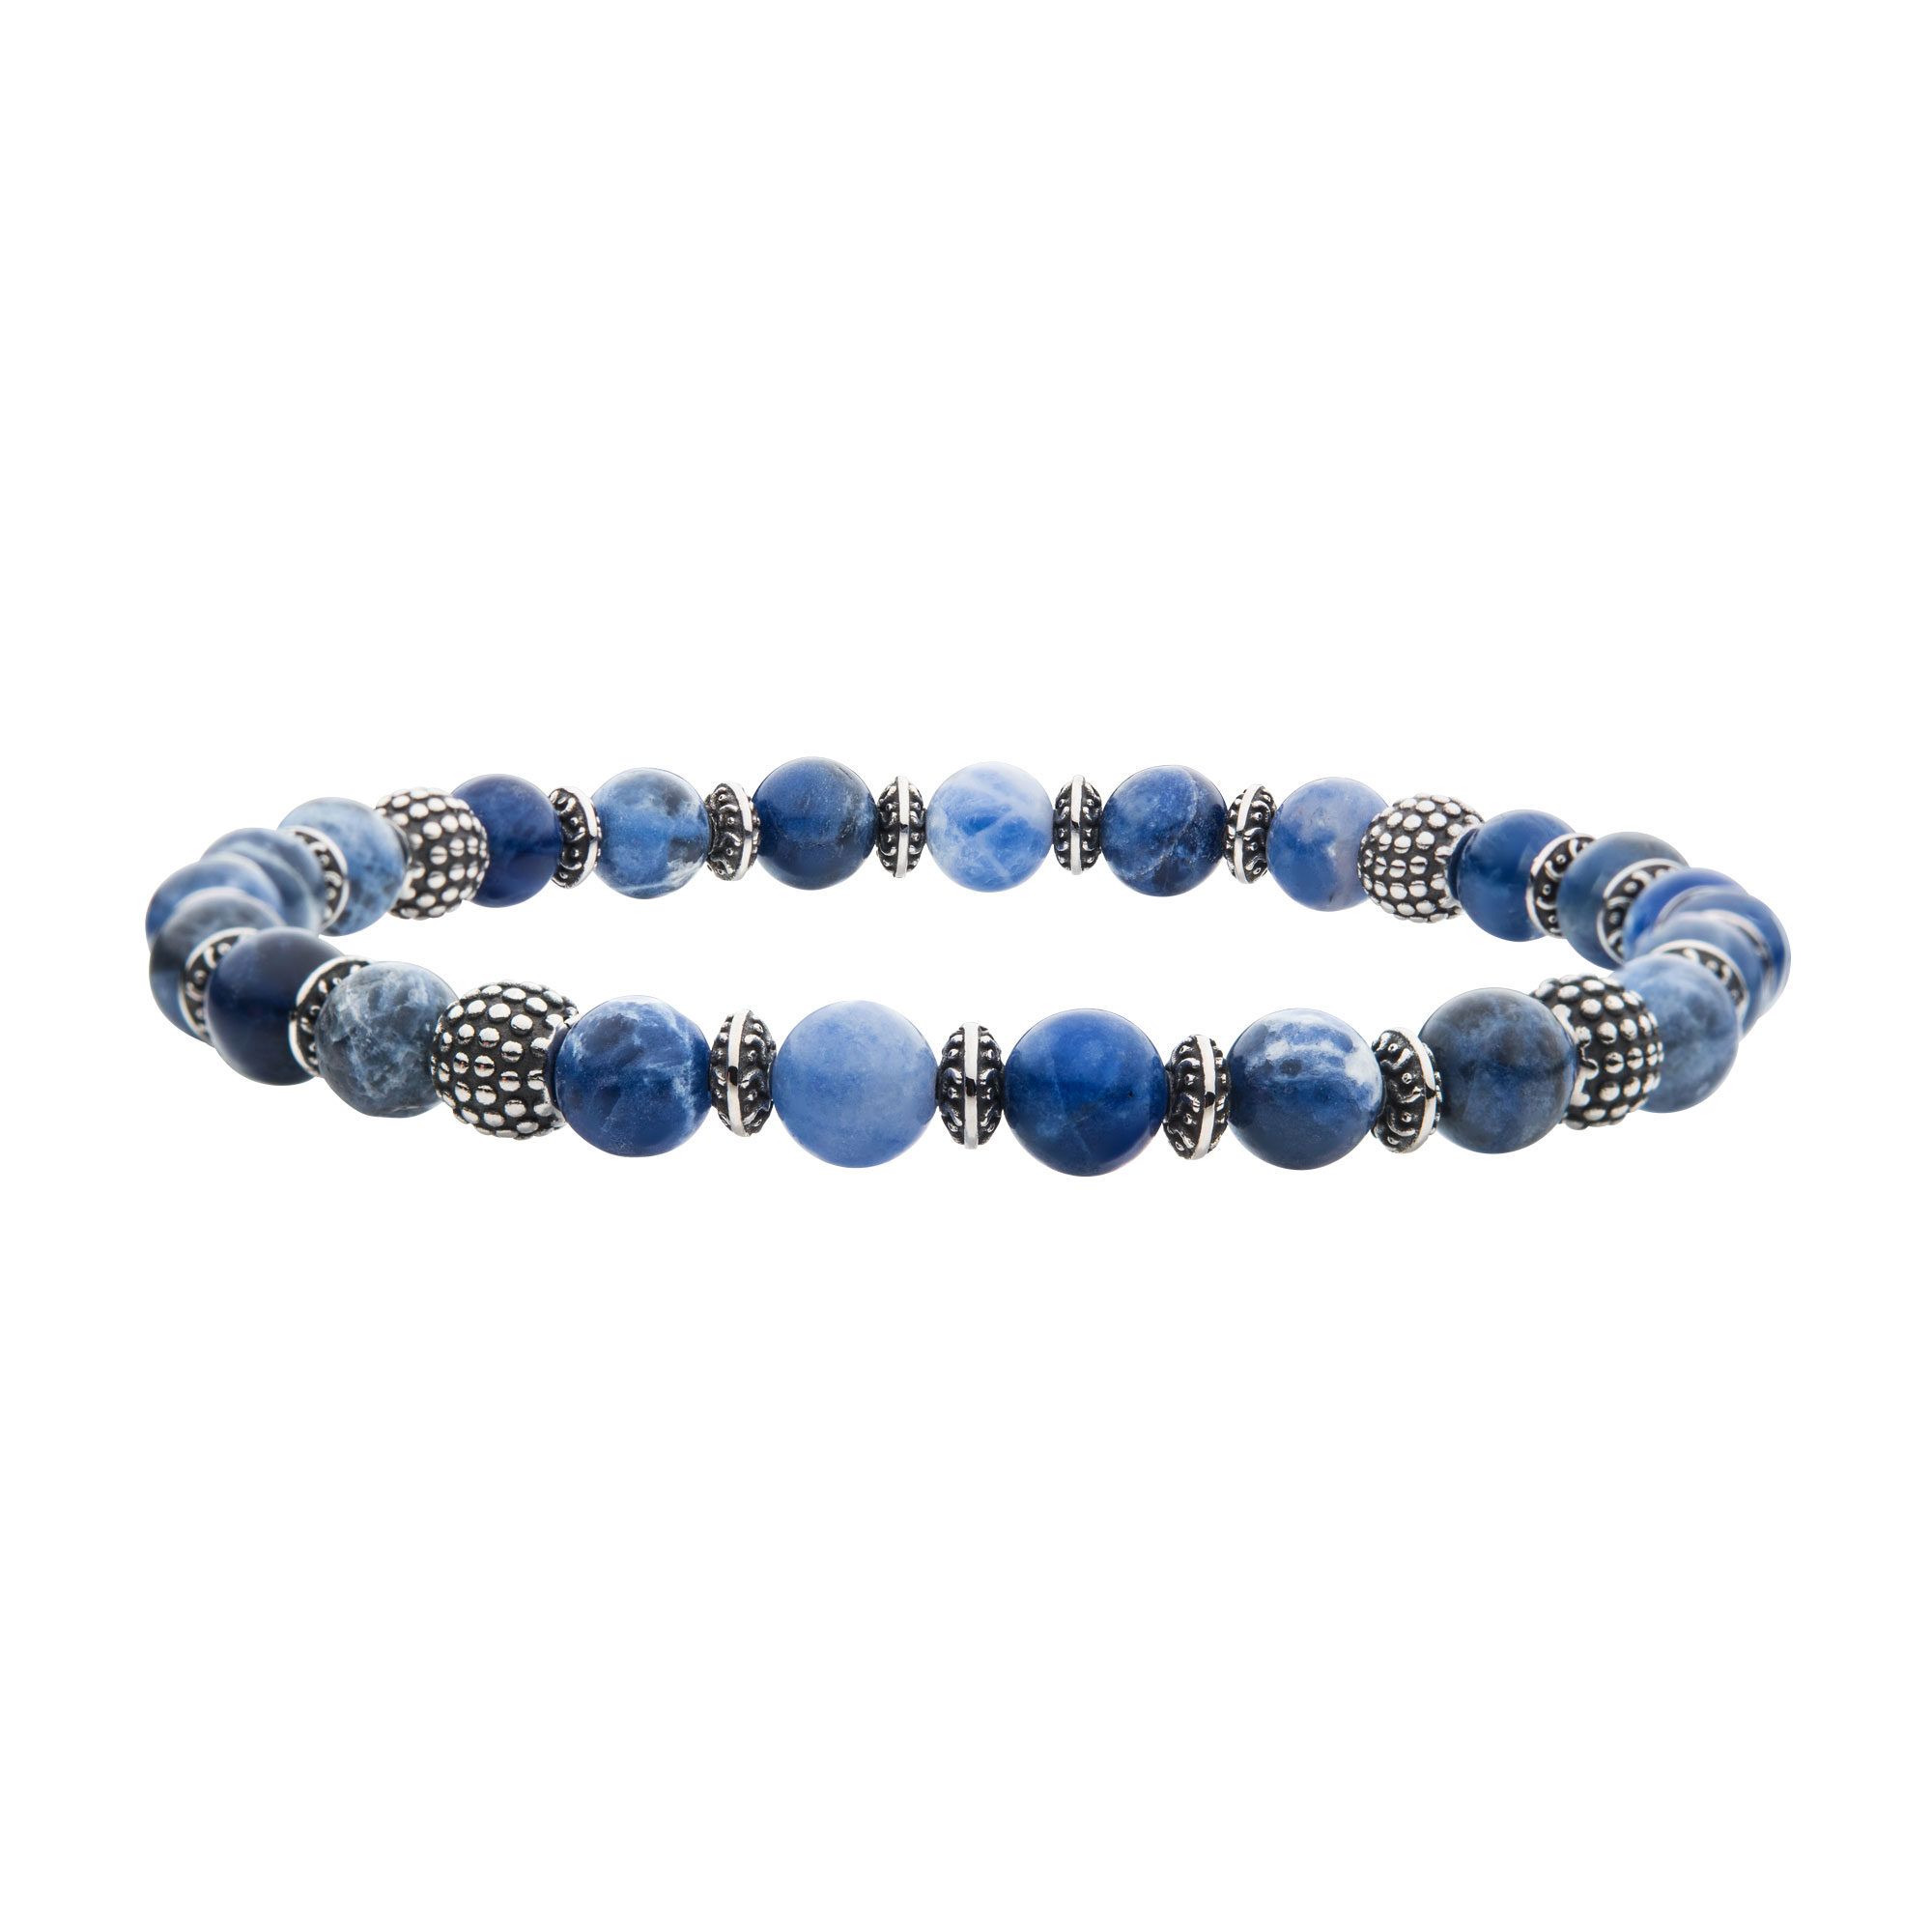 Blue Sodalite Stones with Black Oxidized Beads Bracelet Ken Walker Jewelers Gig Harbor, WA